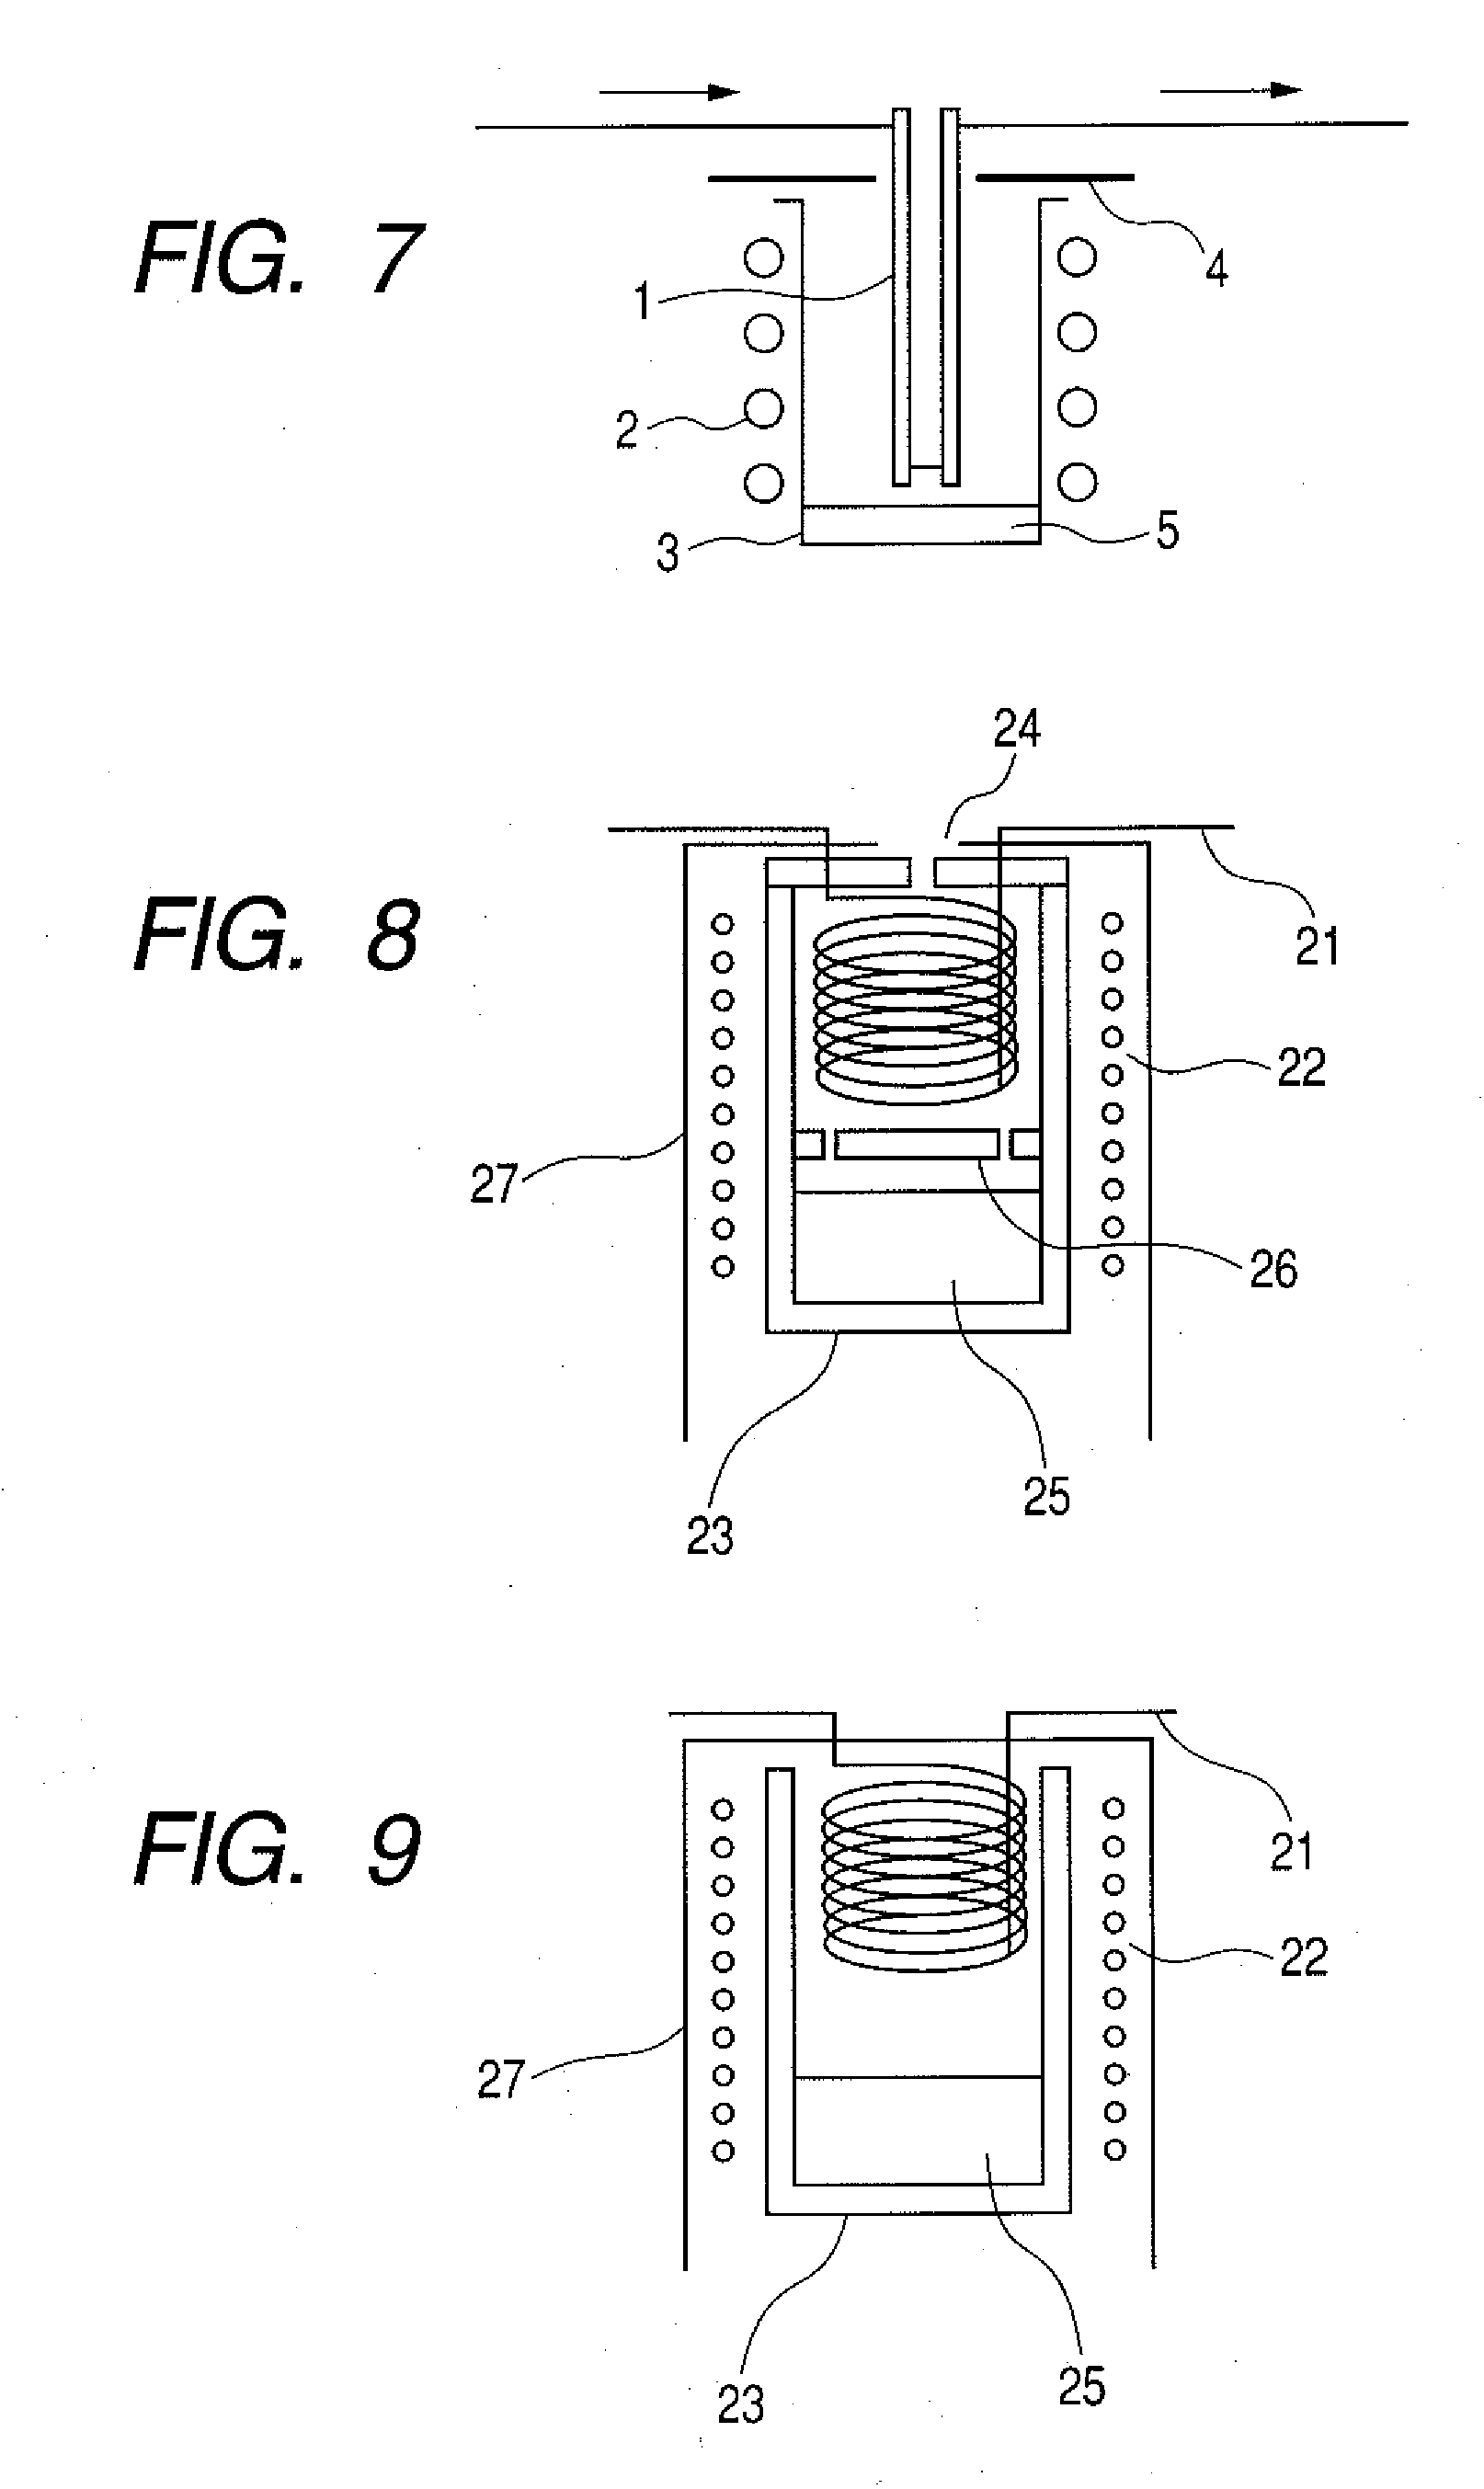 Method of manufacturing organic light emitting device and vapor deposition system